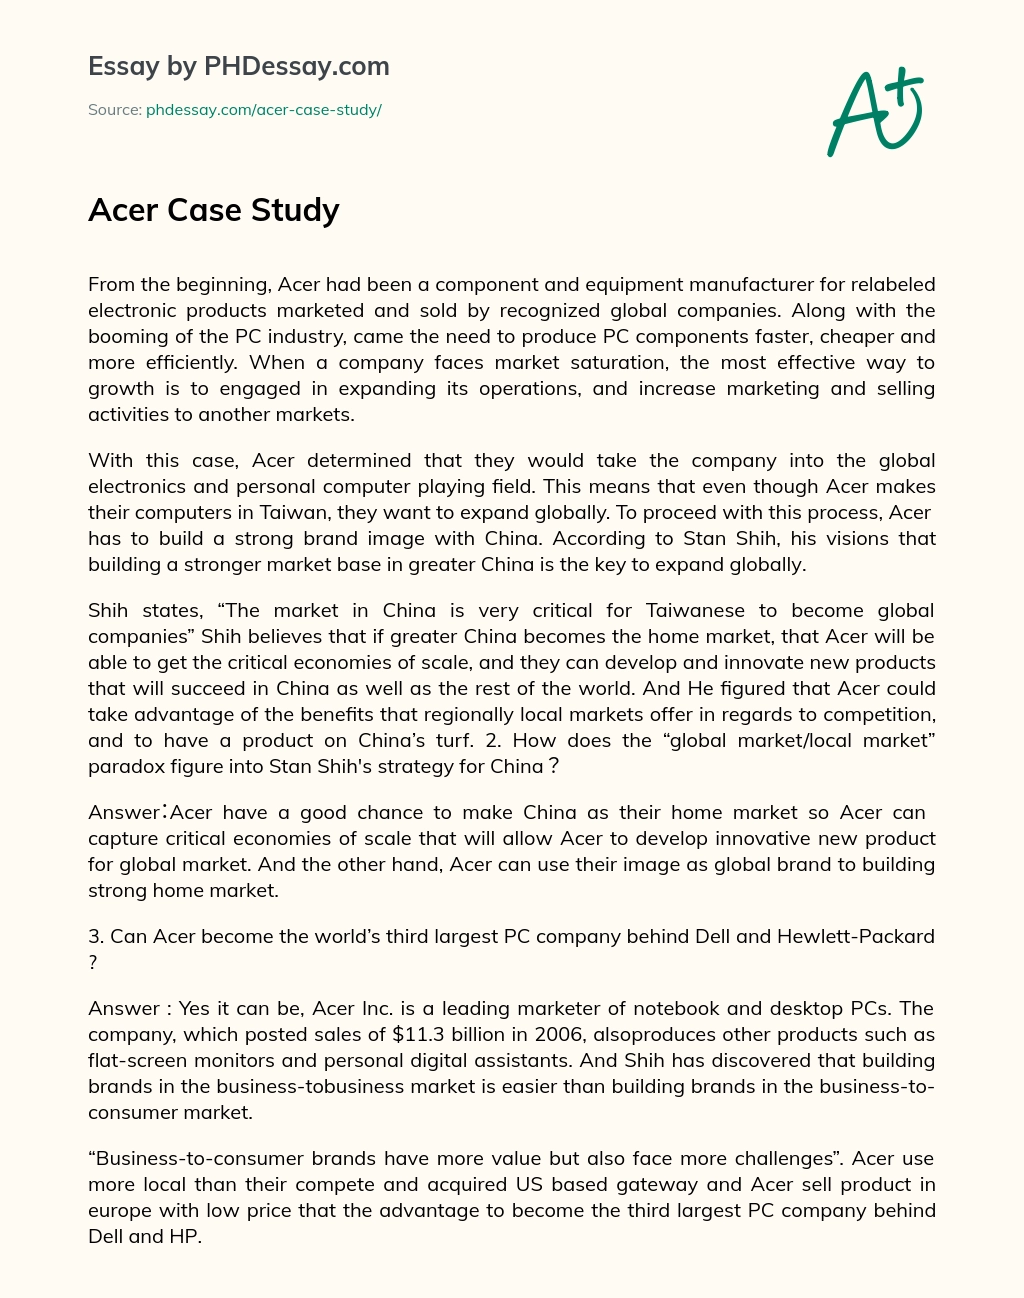 Acer Case Study essay